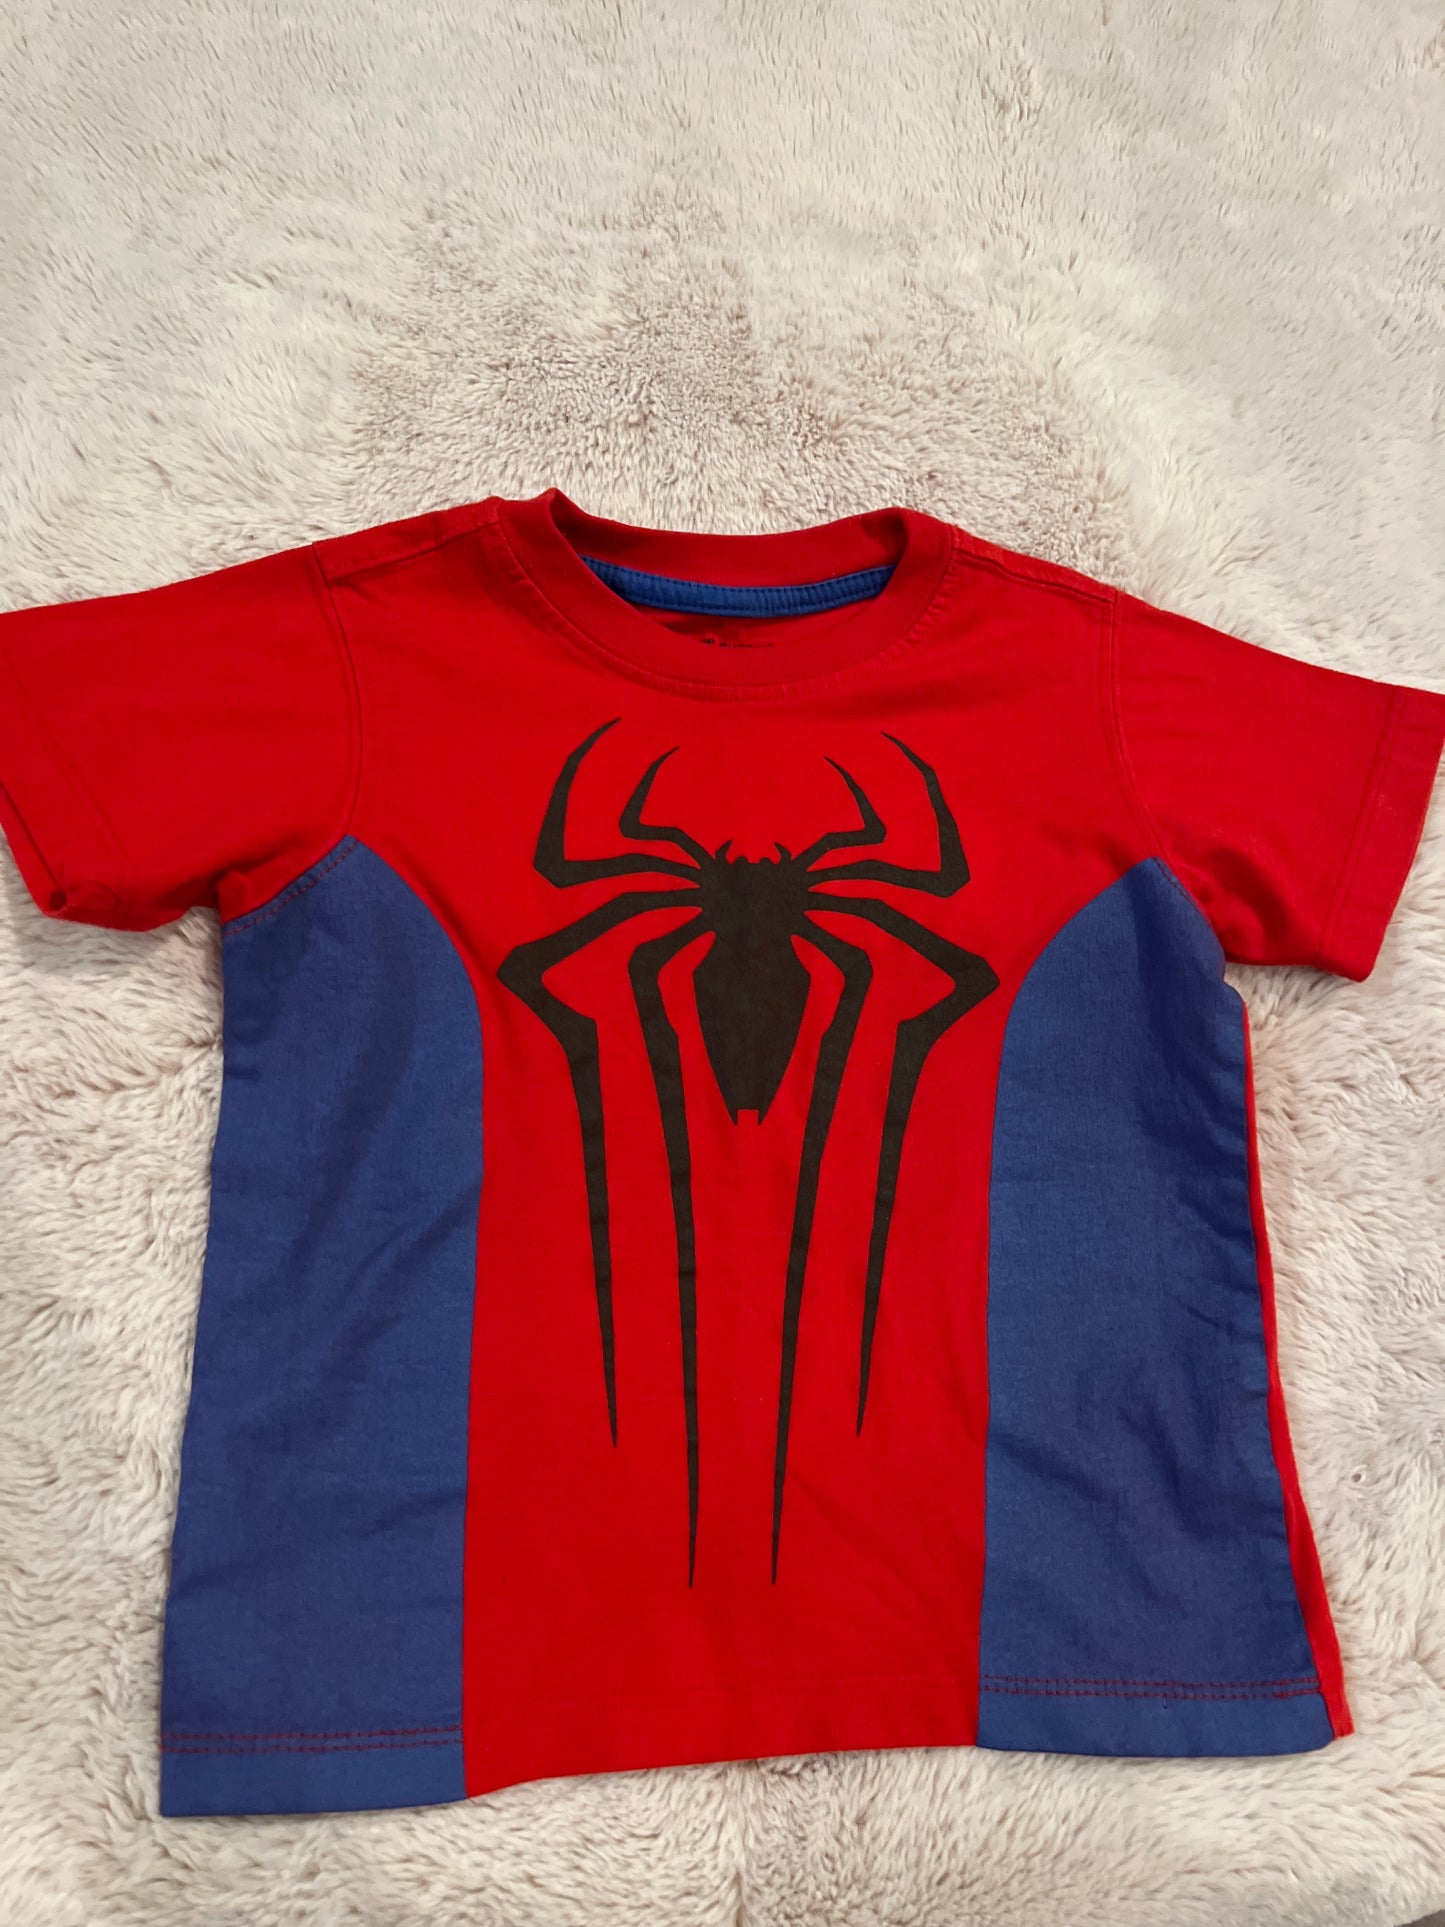 Boys Spider-Man tshirt 2T